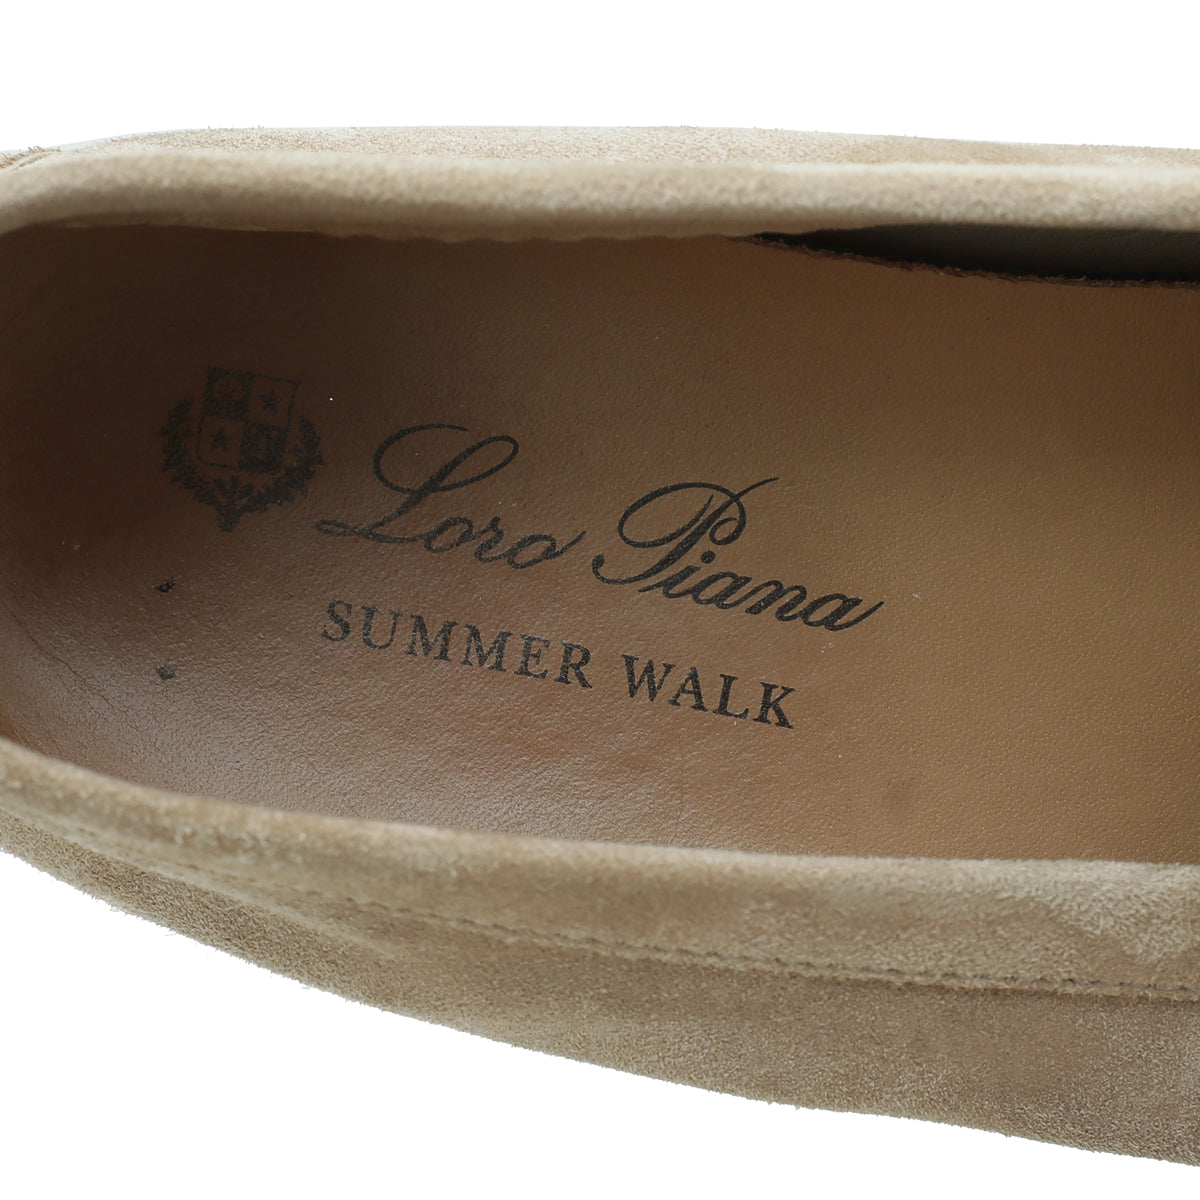 Loro Piana Sandstone Summer Charm Walk Loafers 38